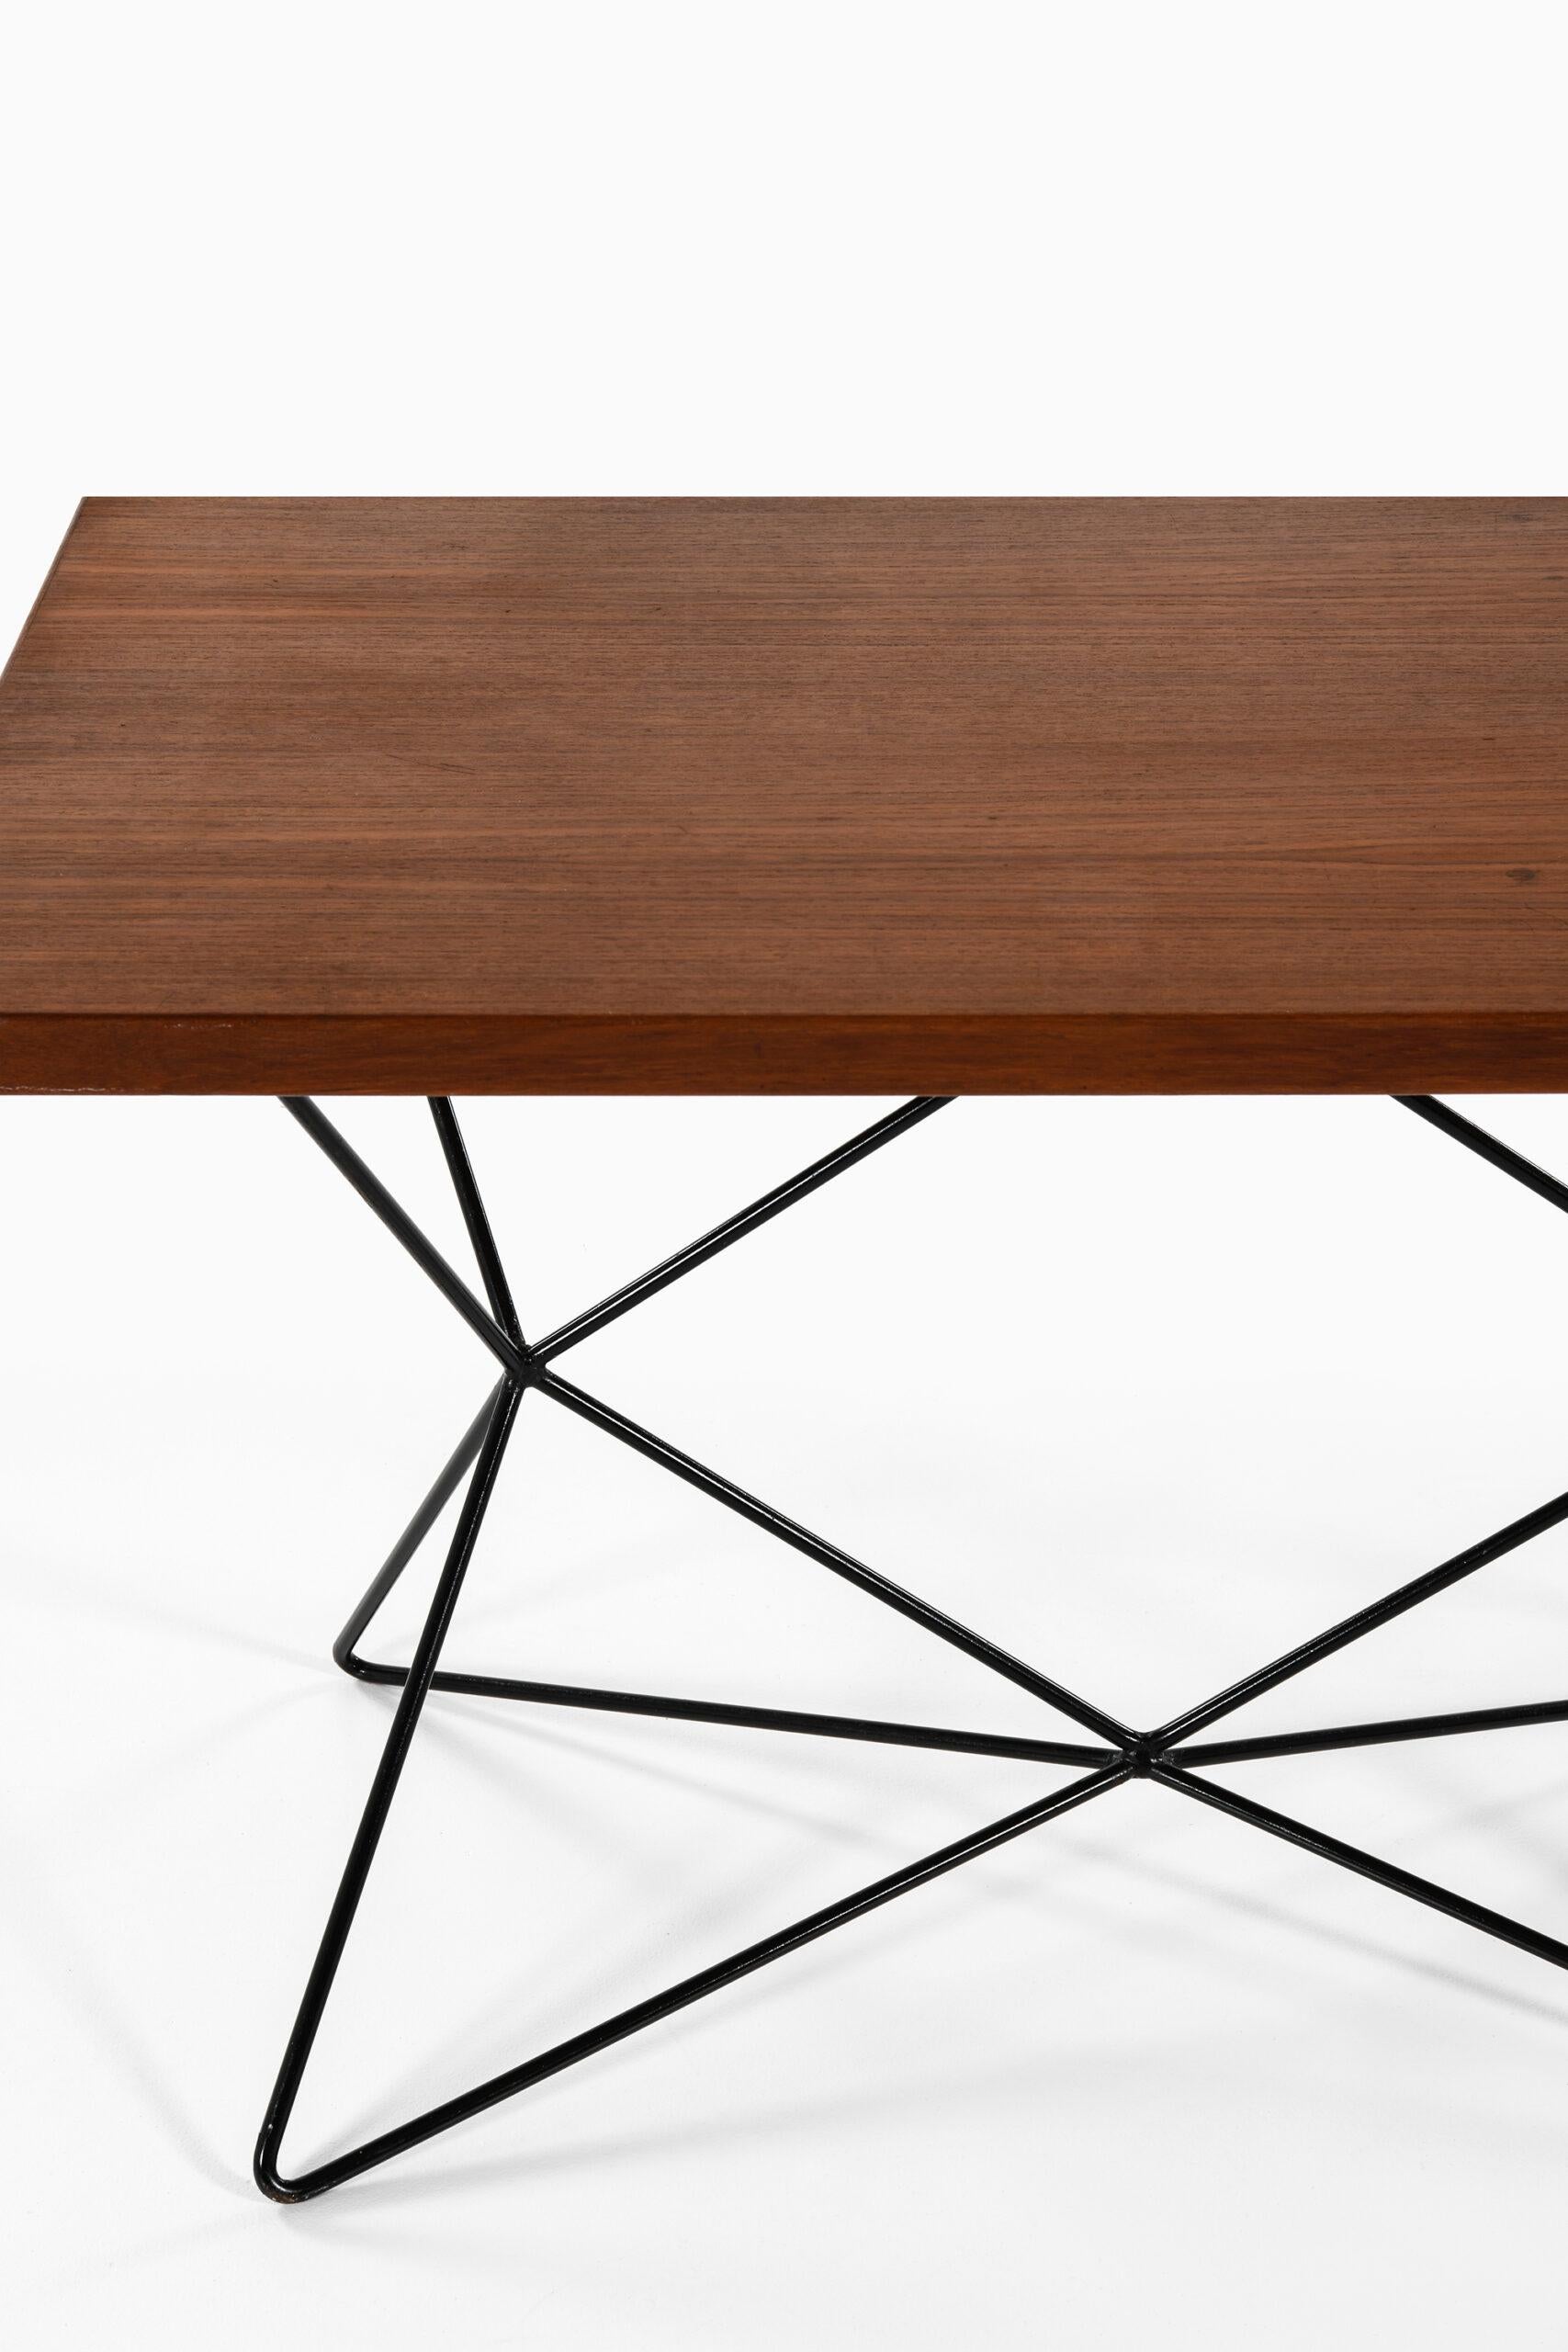 Scandinave moderne Bengt Johan Gullberg table modèle A2 produite par Gullberg Trading Company en vente